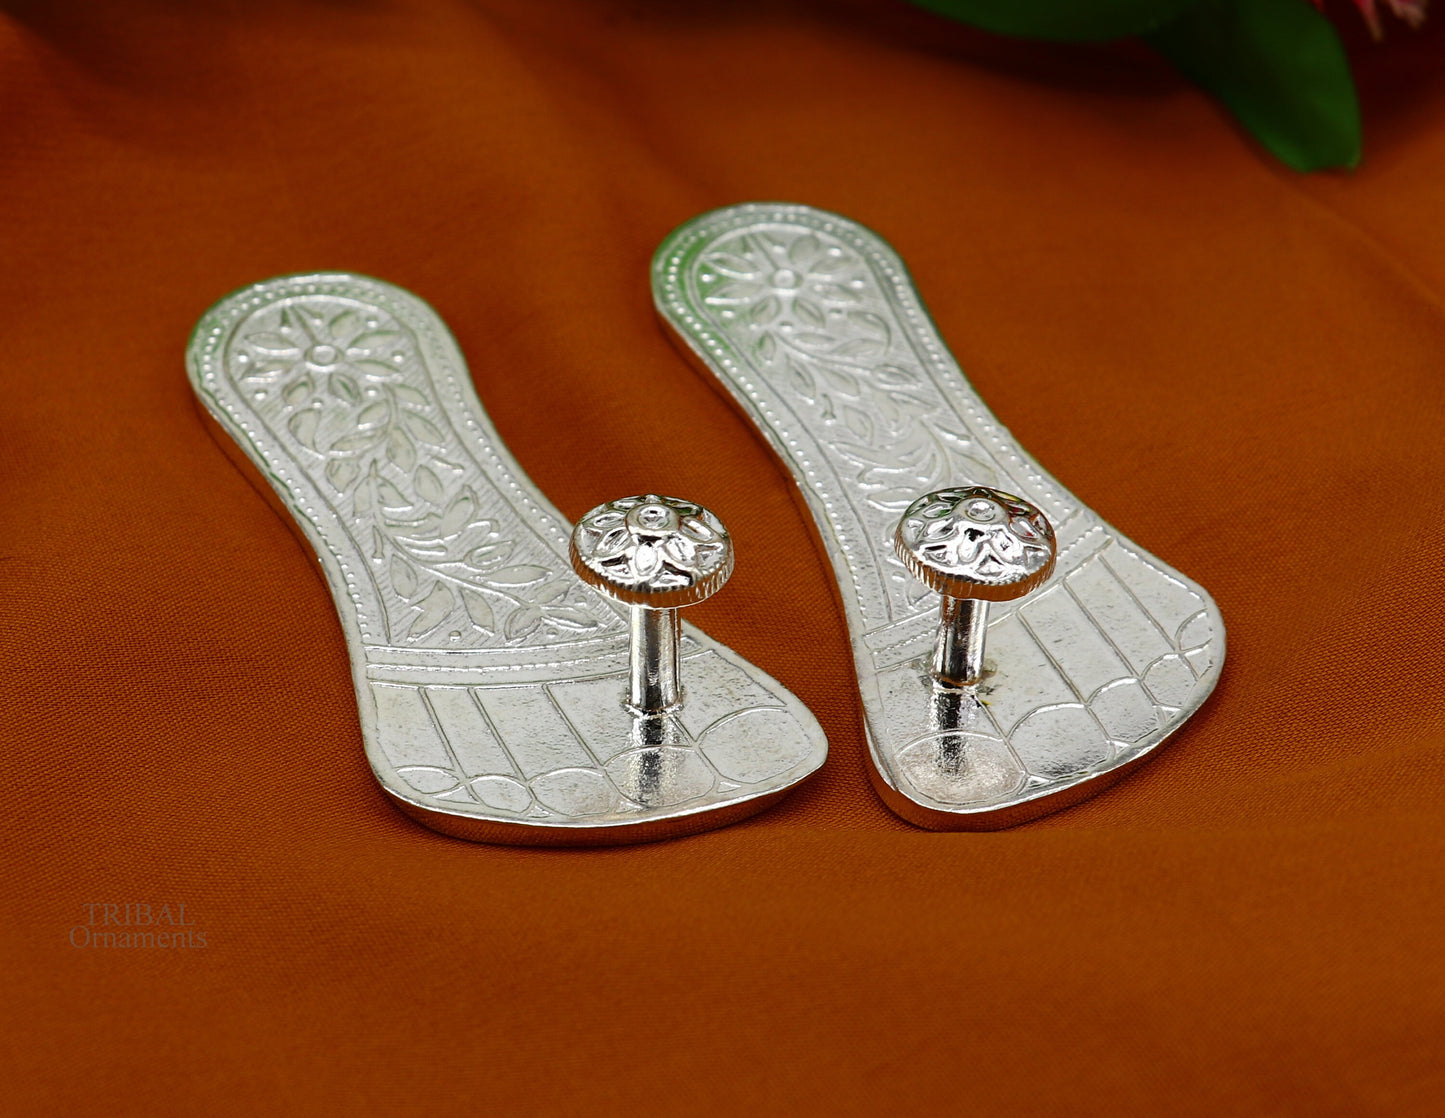 3" Solid sterling silver handmade Charan paduka or slippers for idol krishna, laddu gopala, little krishna or Vshnu Narayana puja art su637 - TRIBAL ORNAMENTS